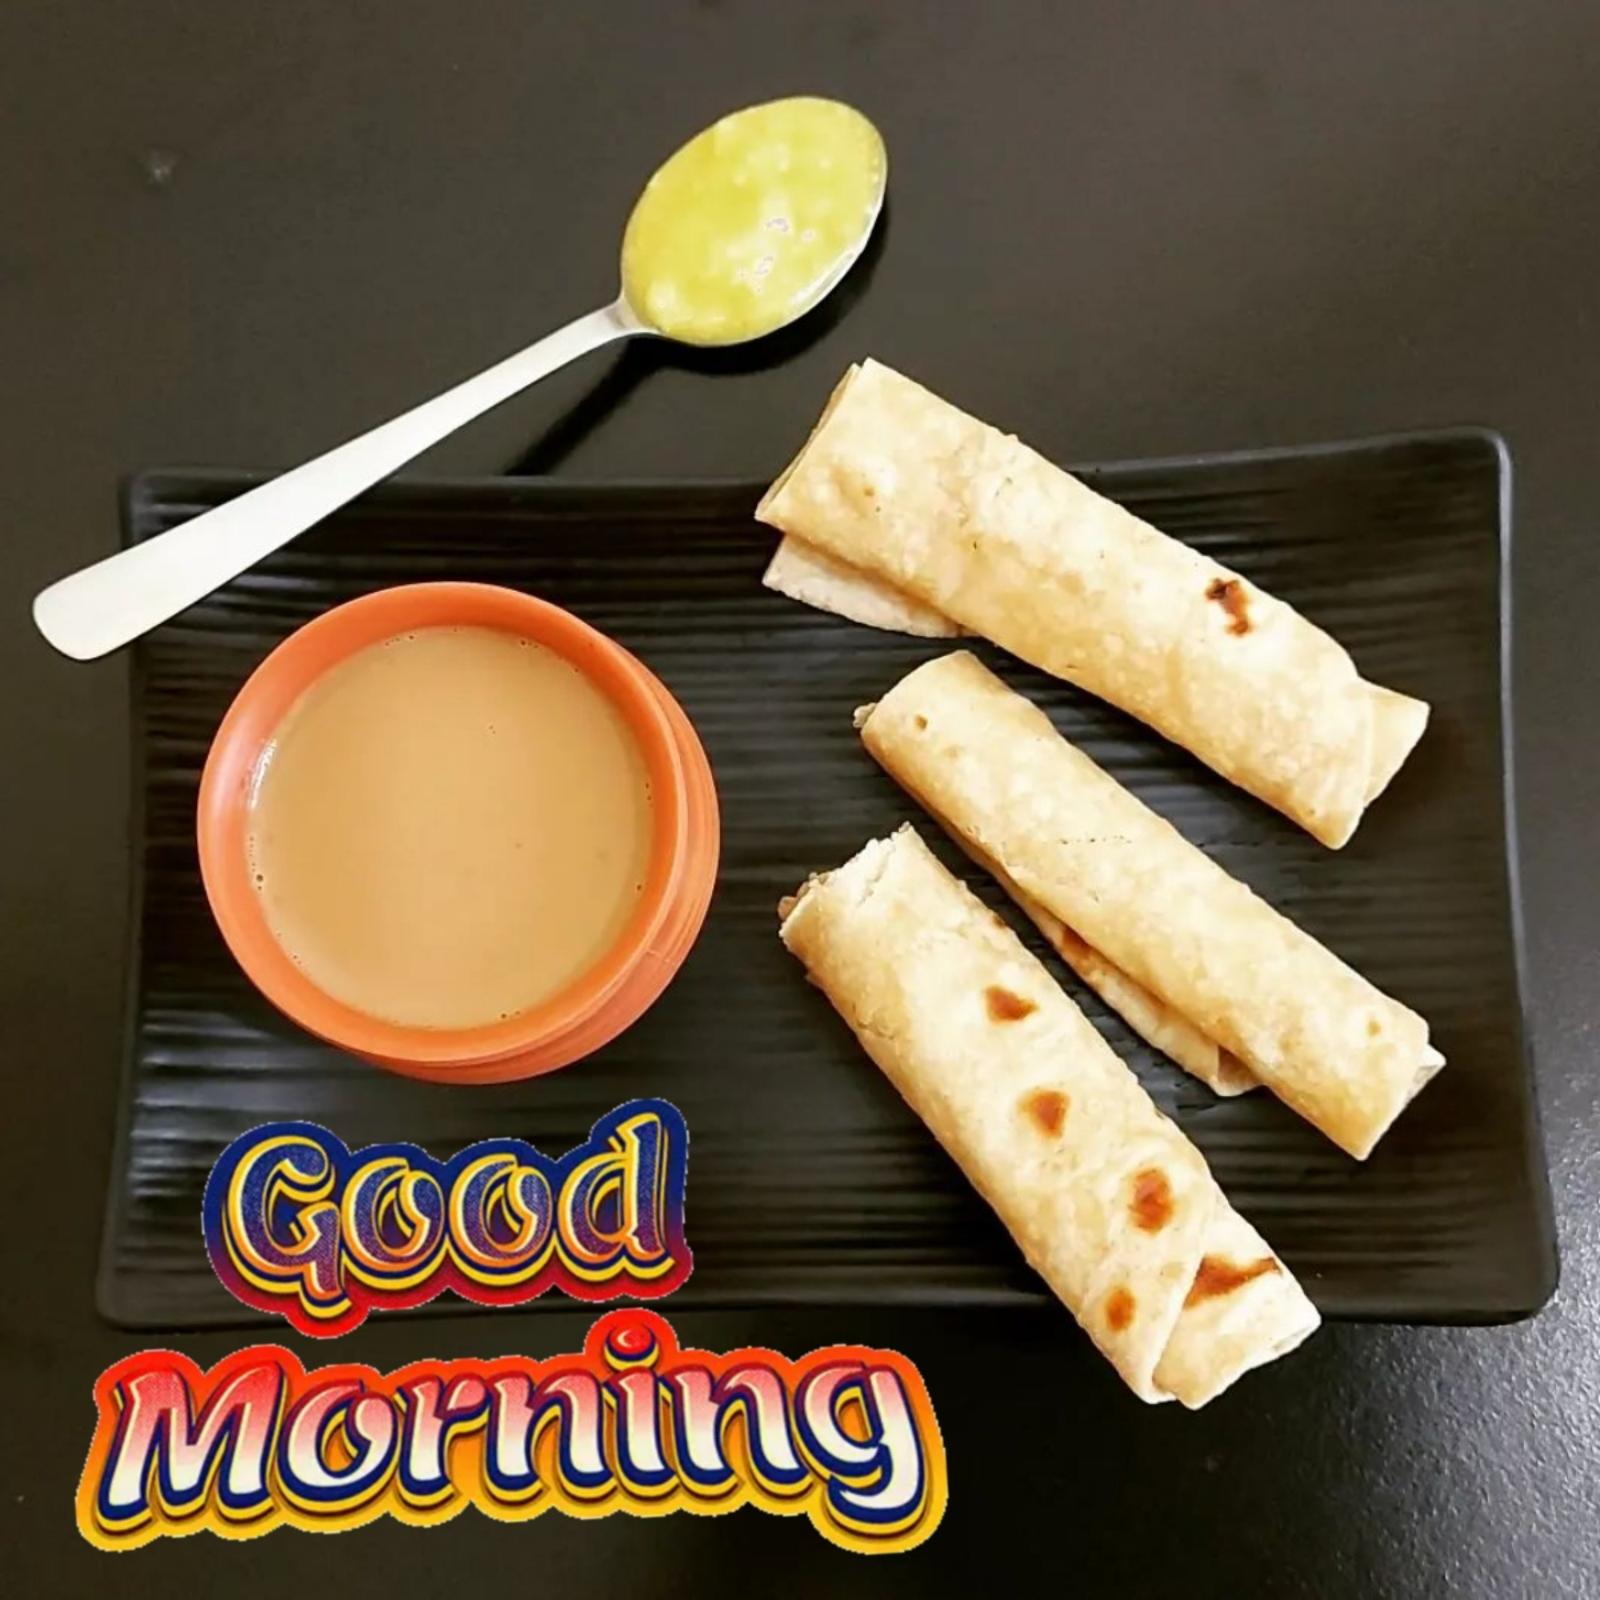 Tea Good Morning Breakfast Images